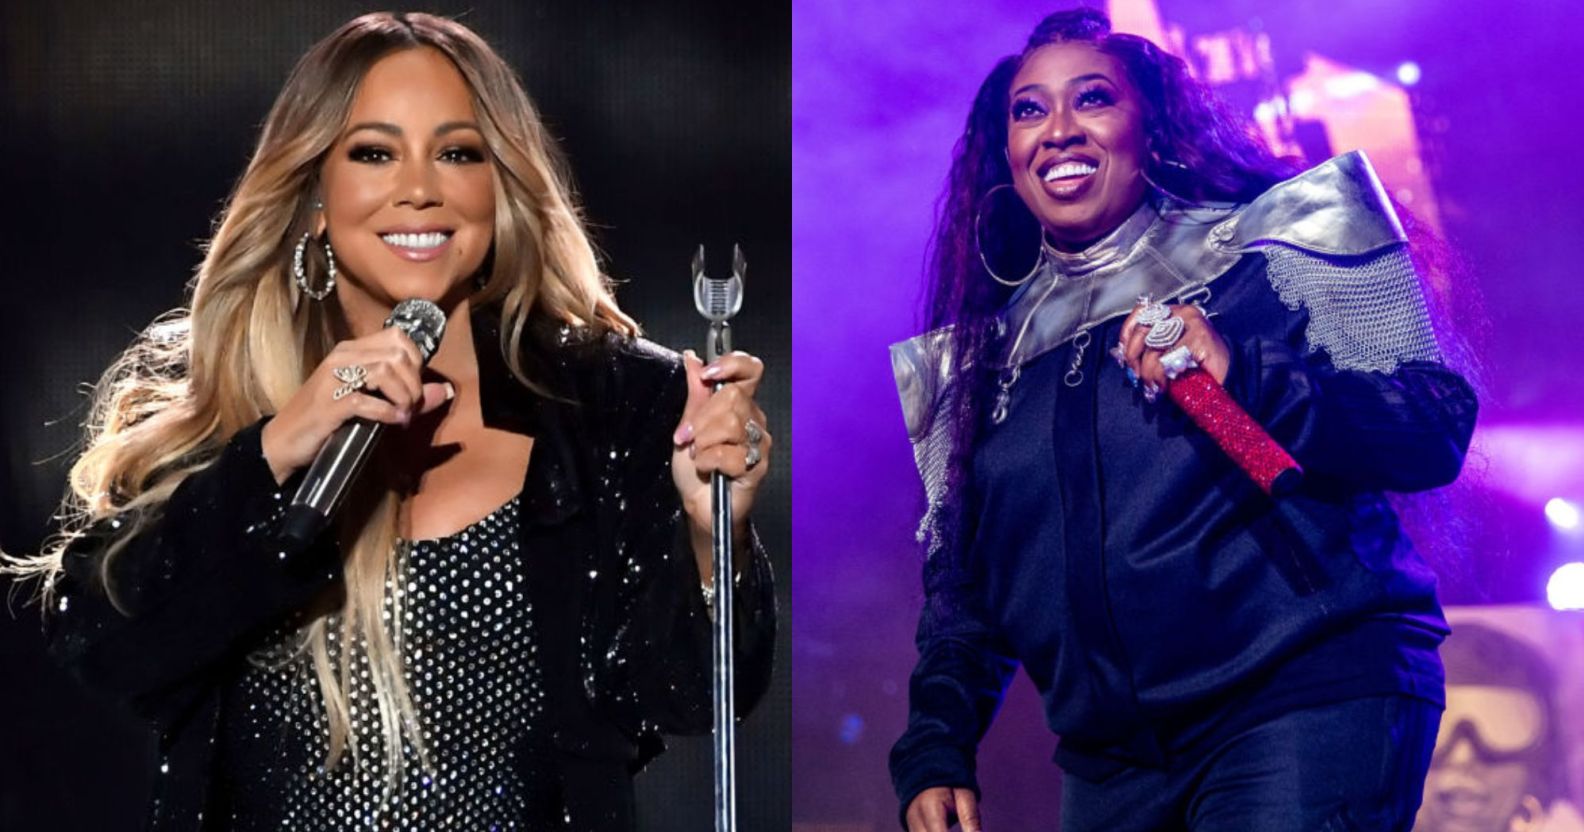 Mariah Carey and Missy Elliott are headlining Lovers & Friends festival